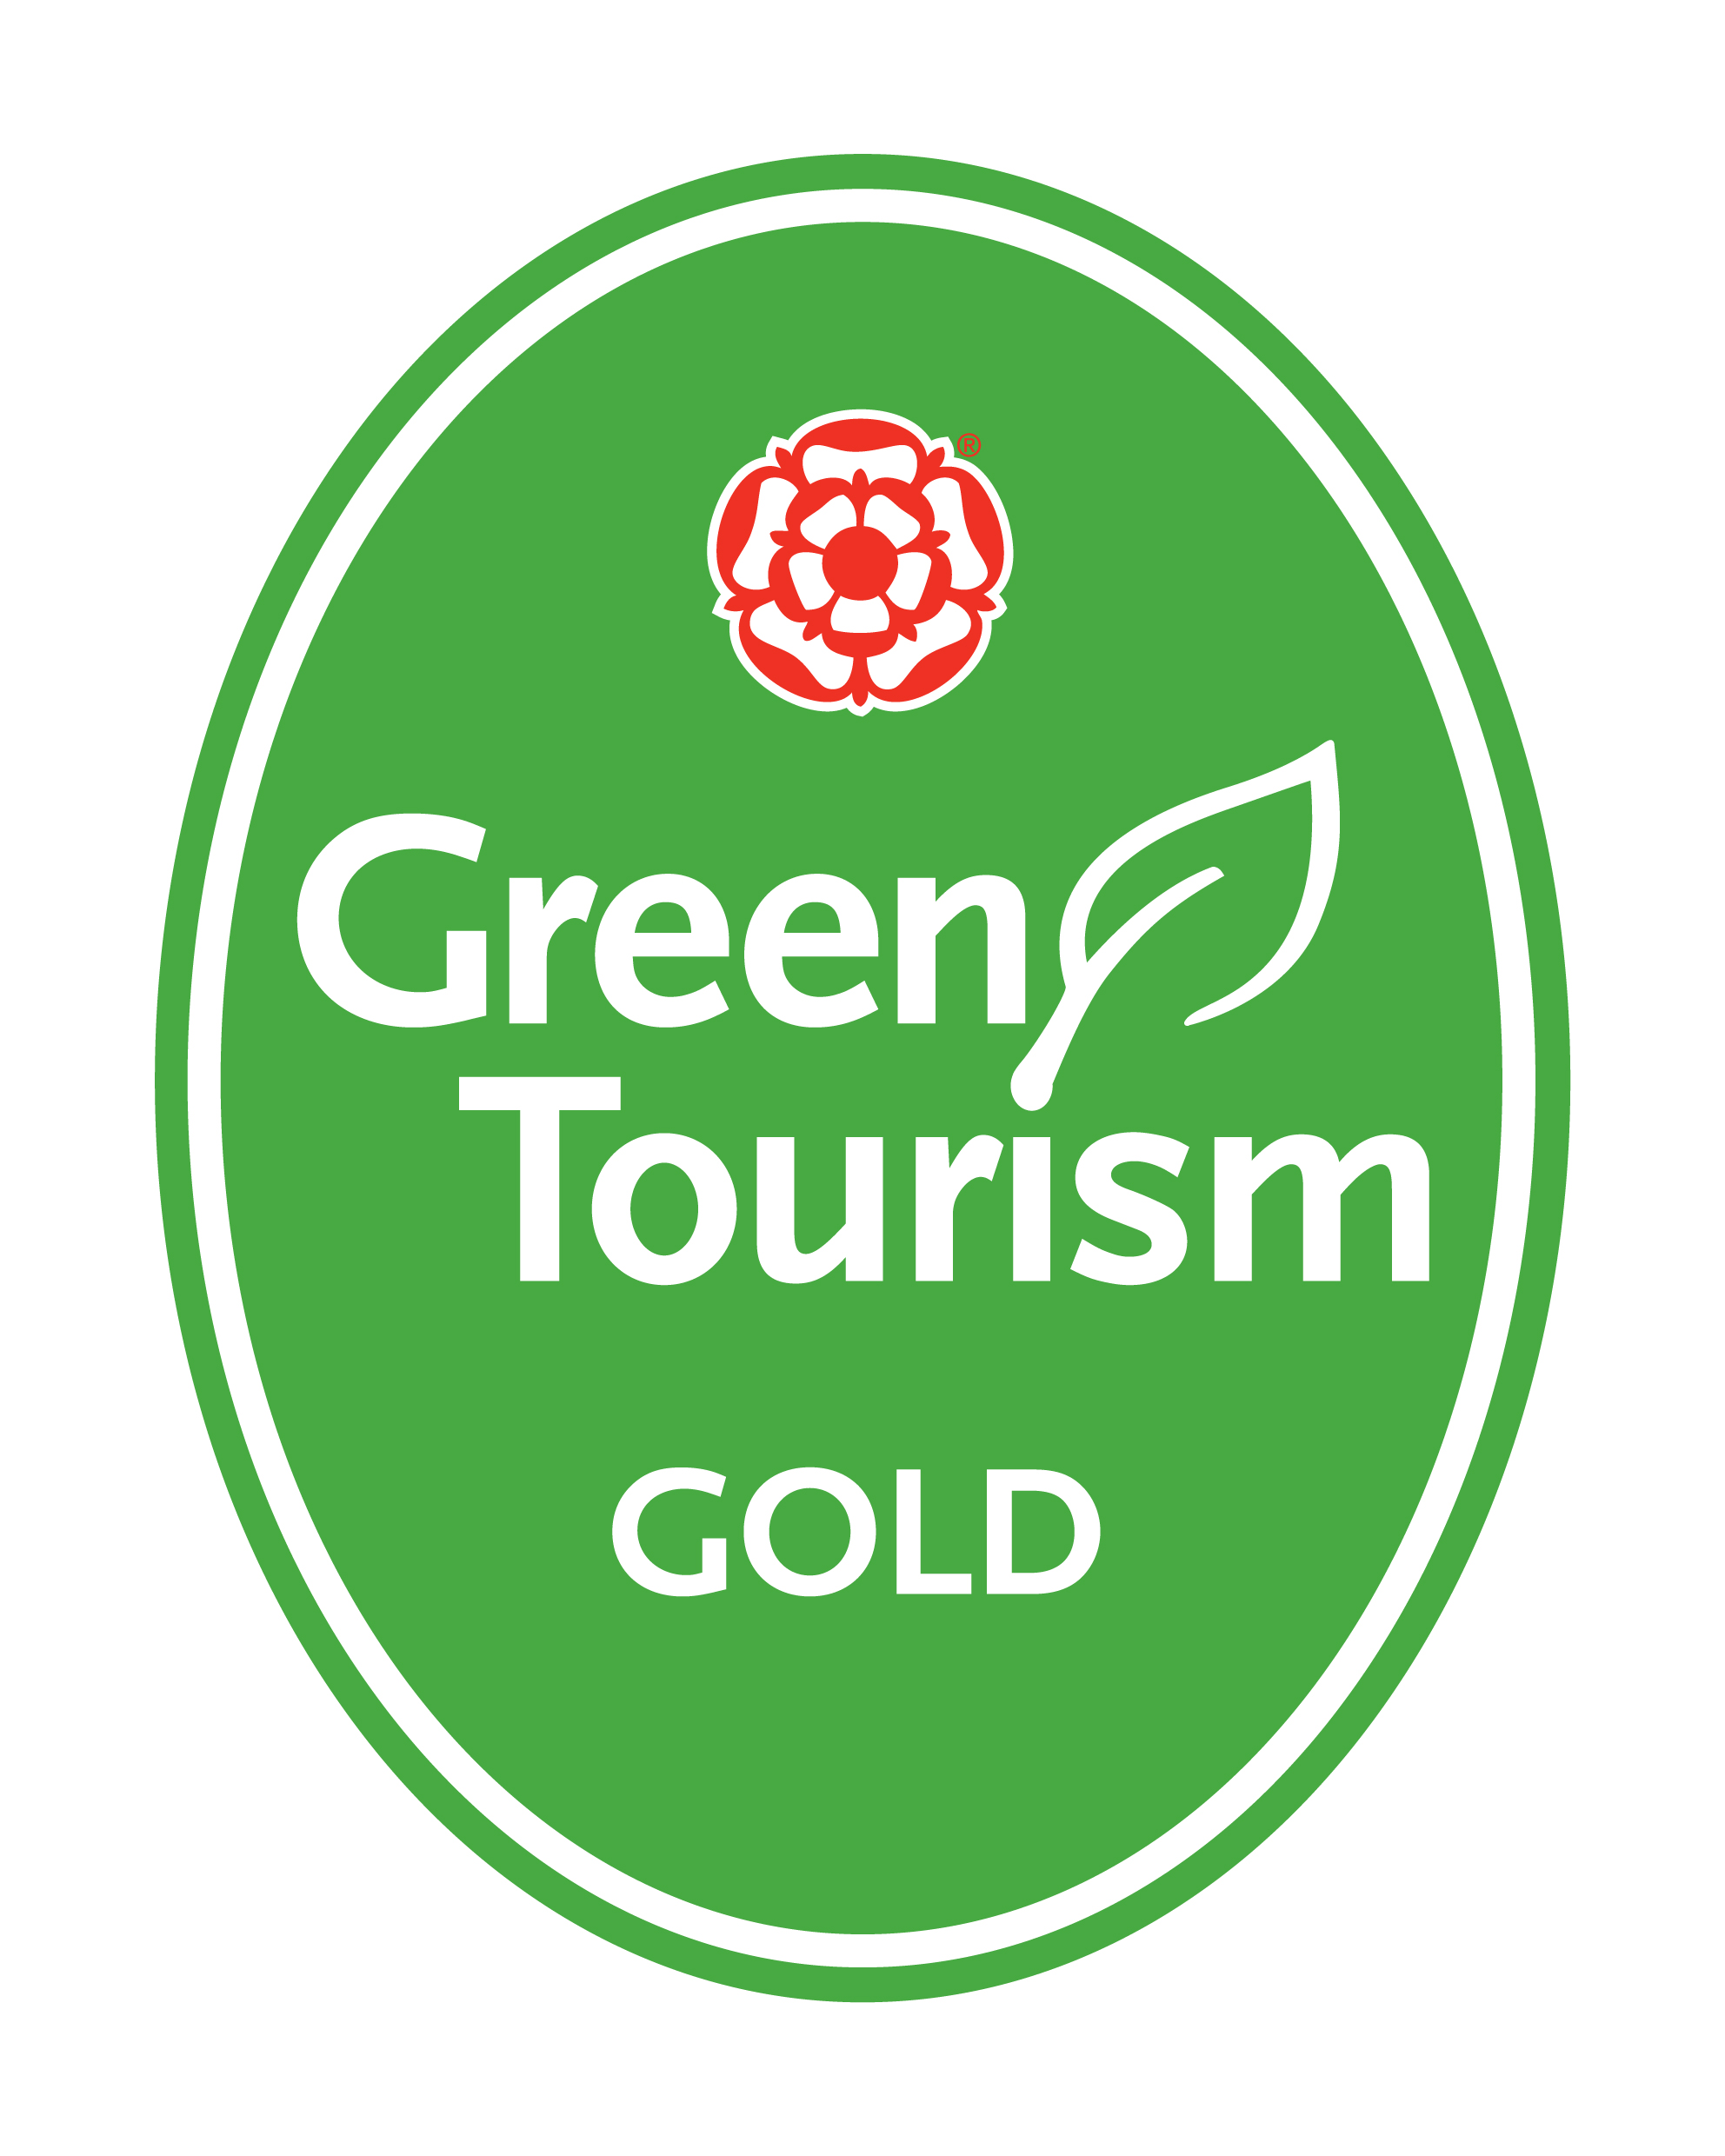 Green Tourism Business Scheme